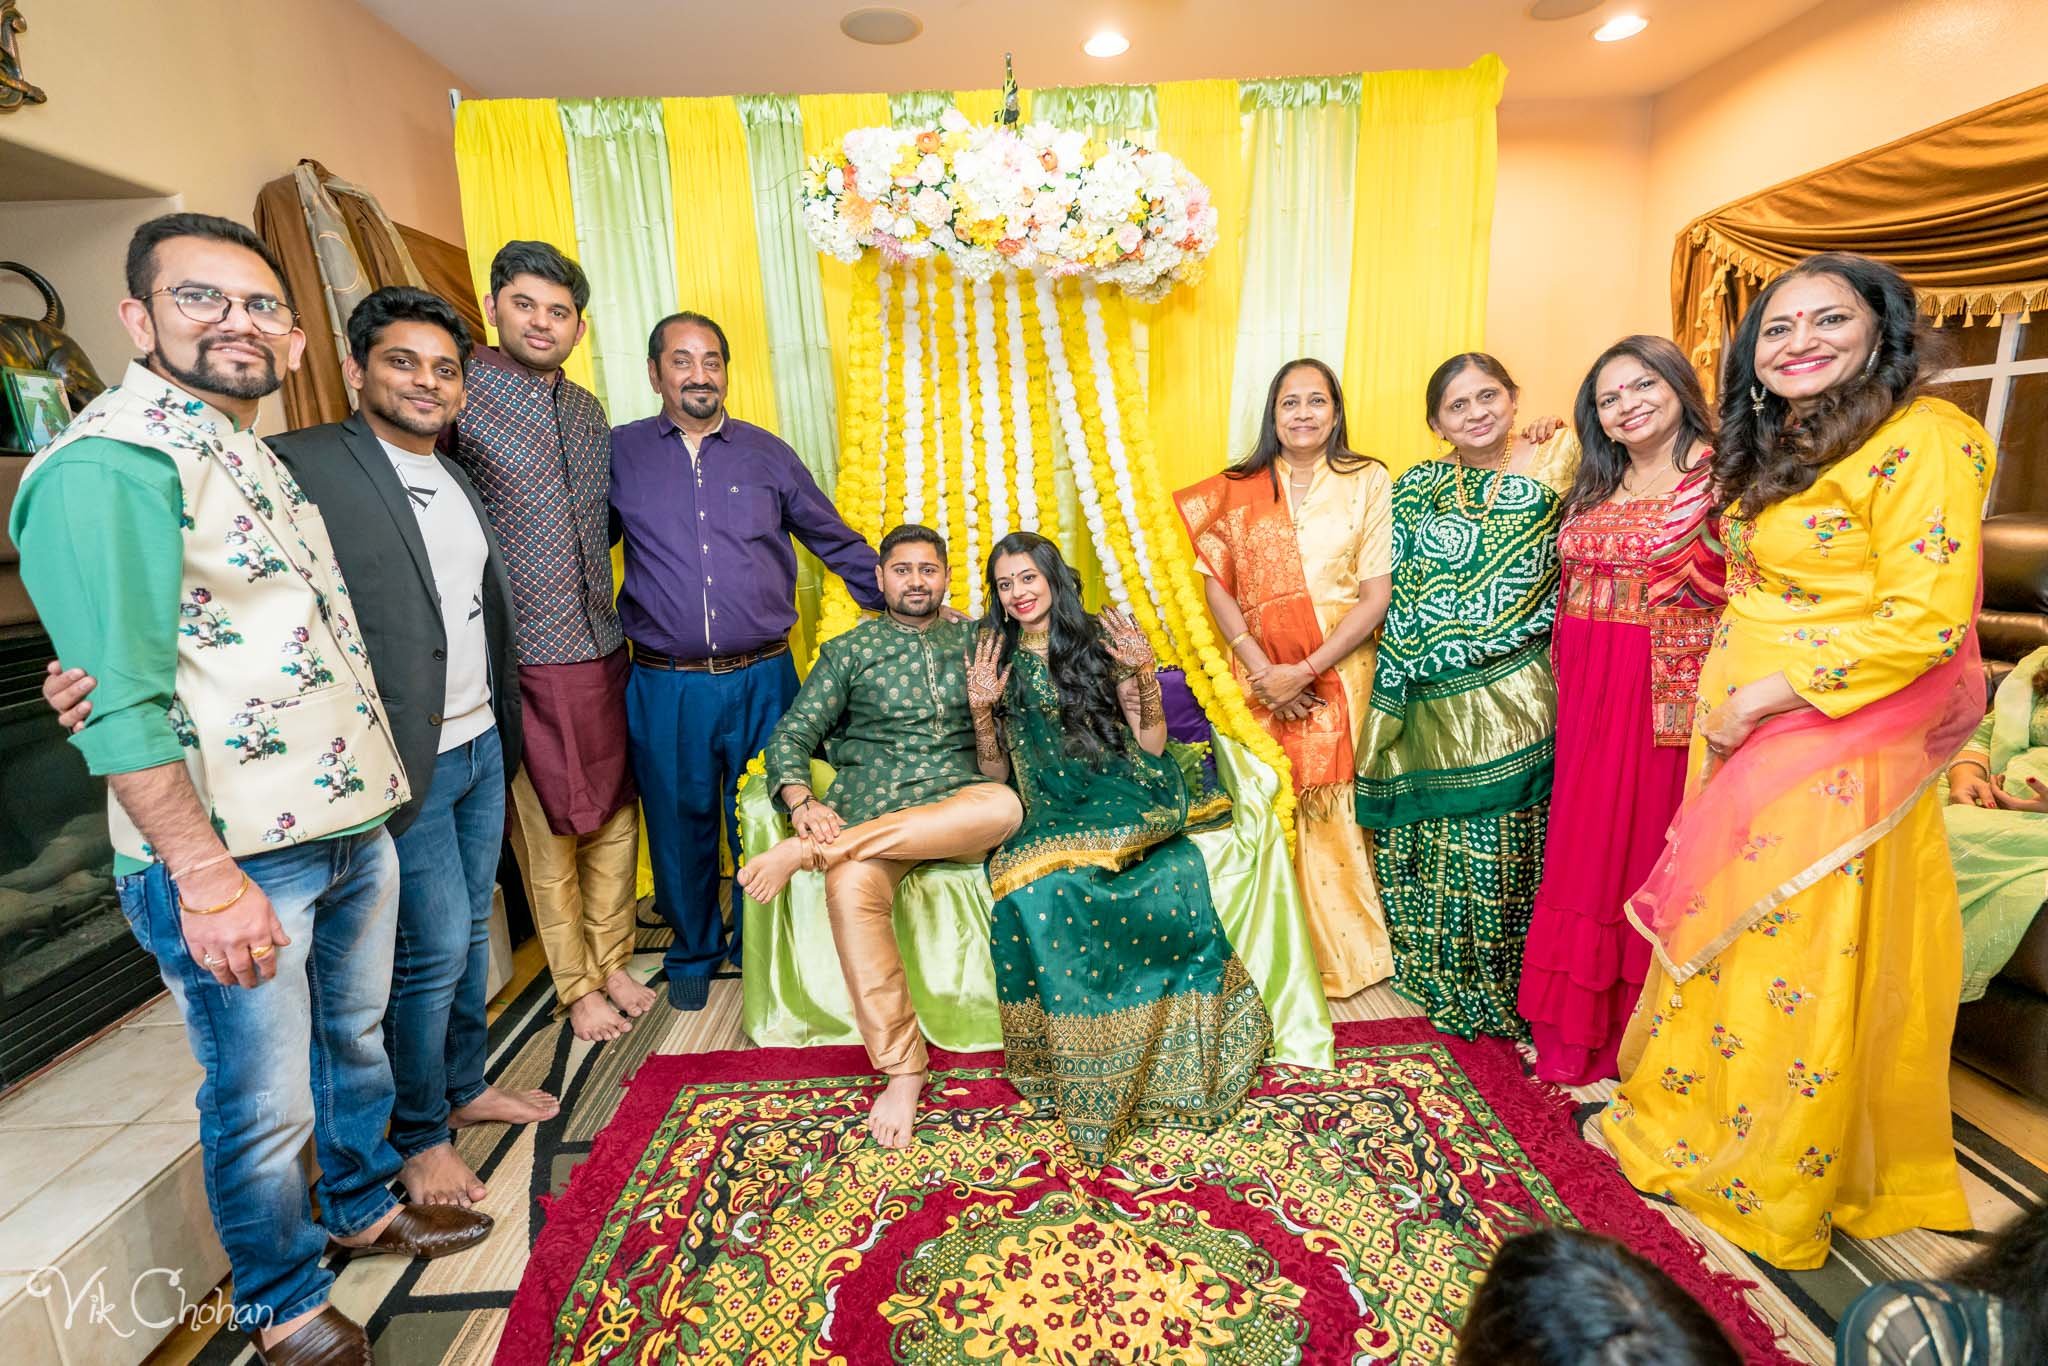 2022-02-03-Hely-&-Parth-Mendi-Indian-Wedding-Vik-Chohan-Photography-Photo-Booth-Social-Media-VCP-178.jpg